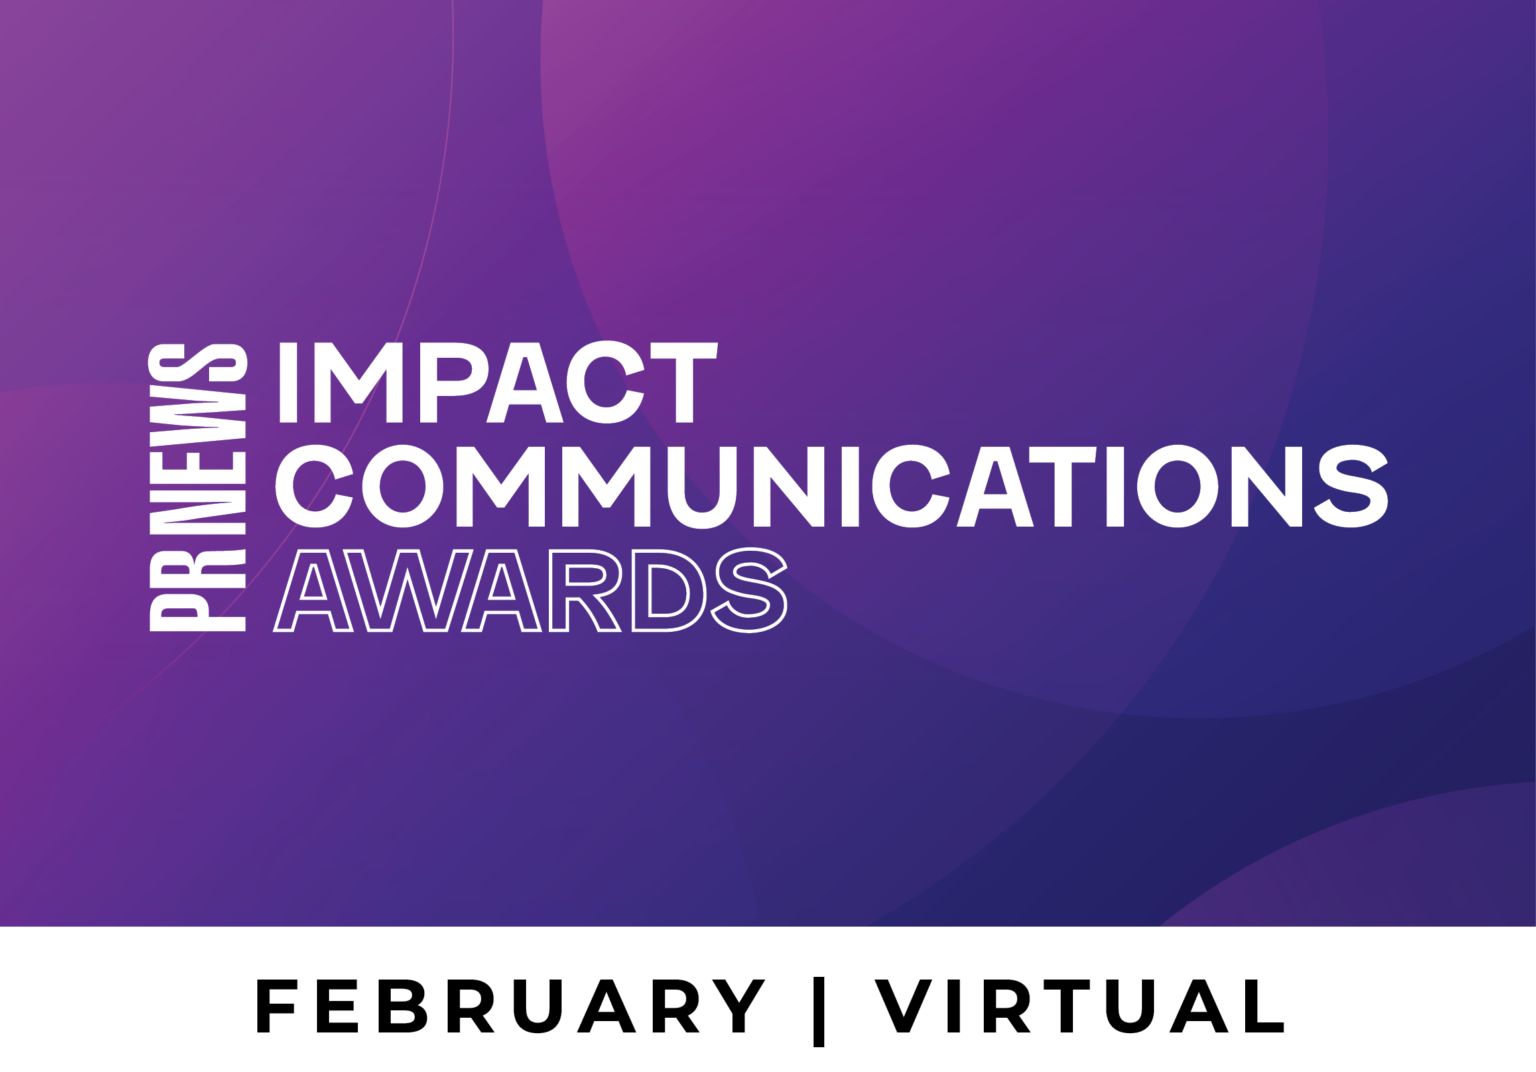 Impact communications Awards